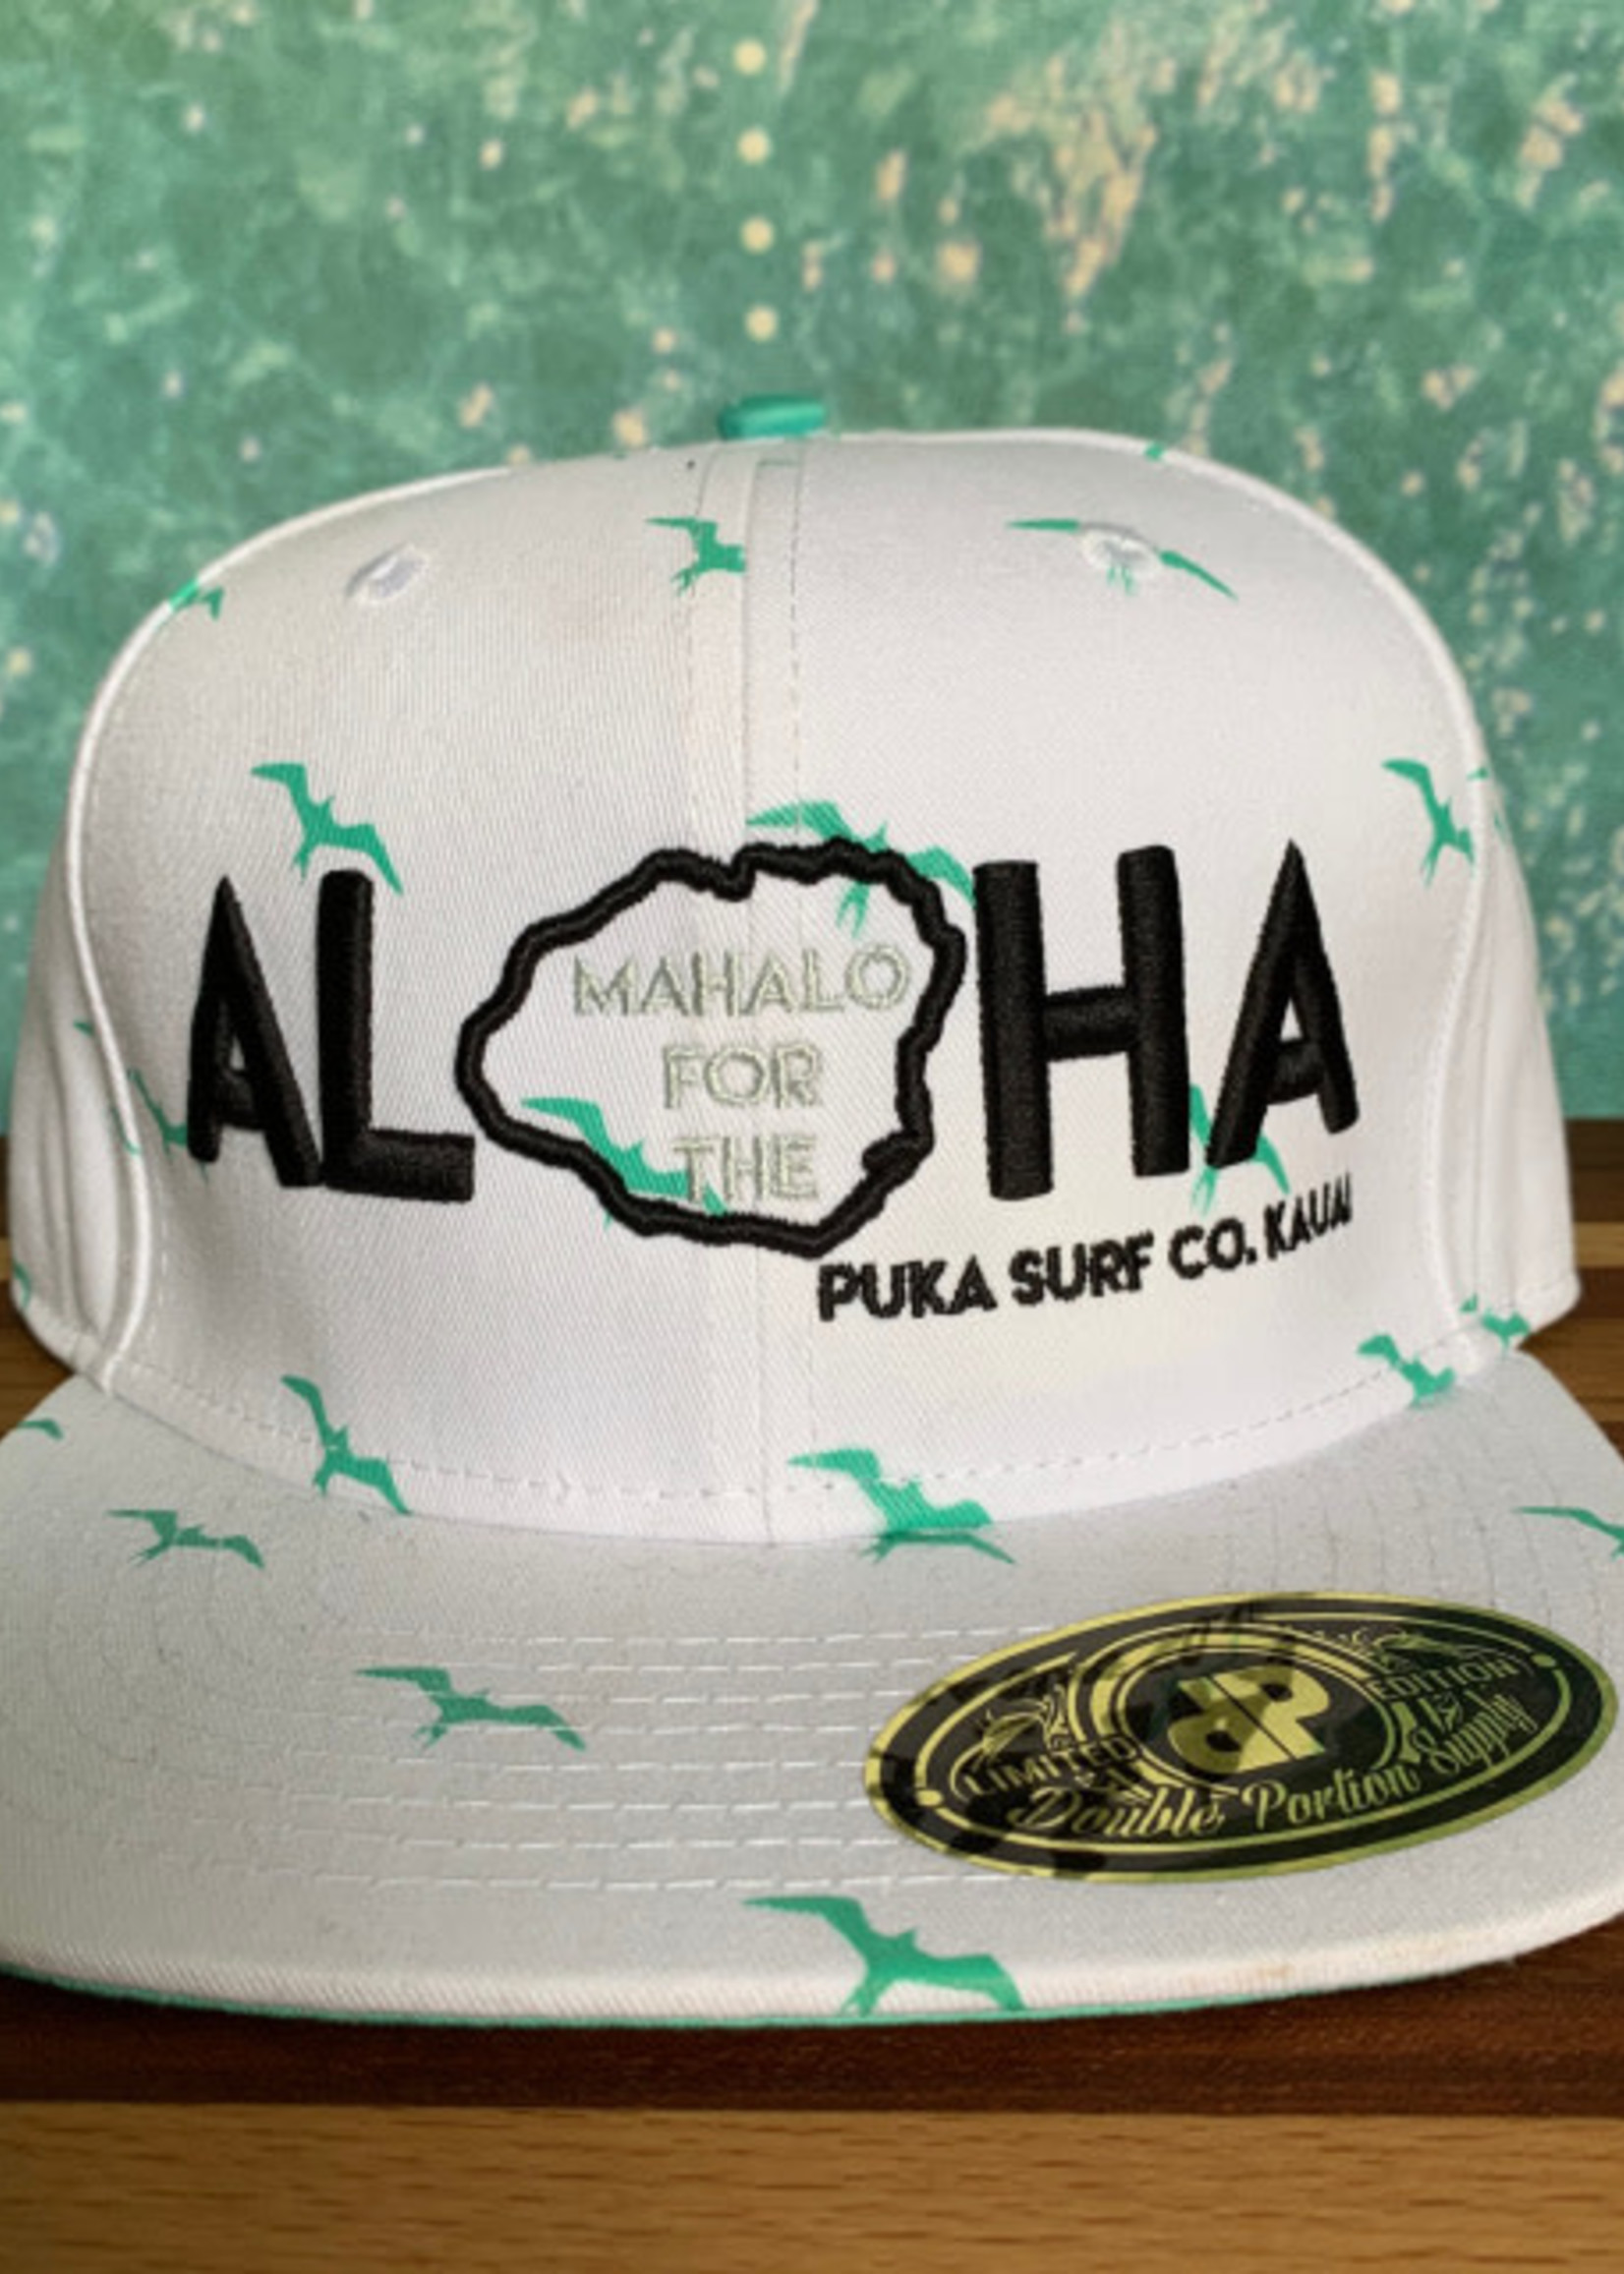 Puka Surf Co. Hawaii White Iwa - Mahalo Aloha Snap